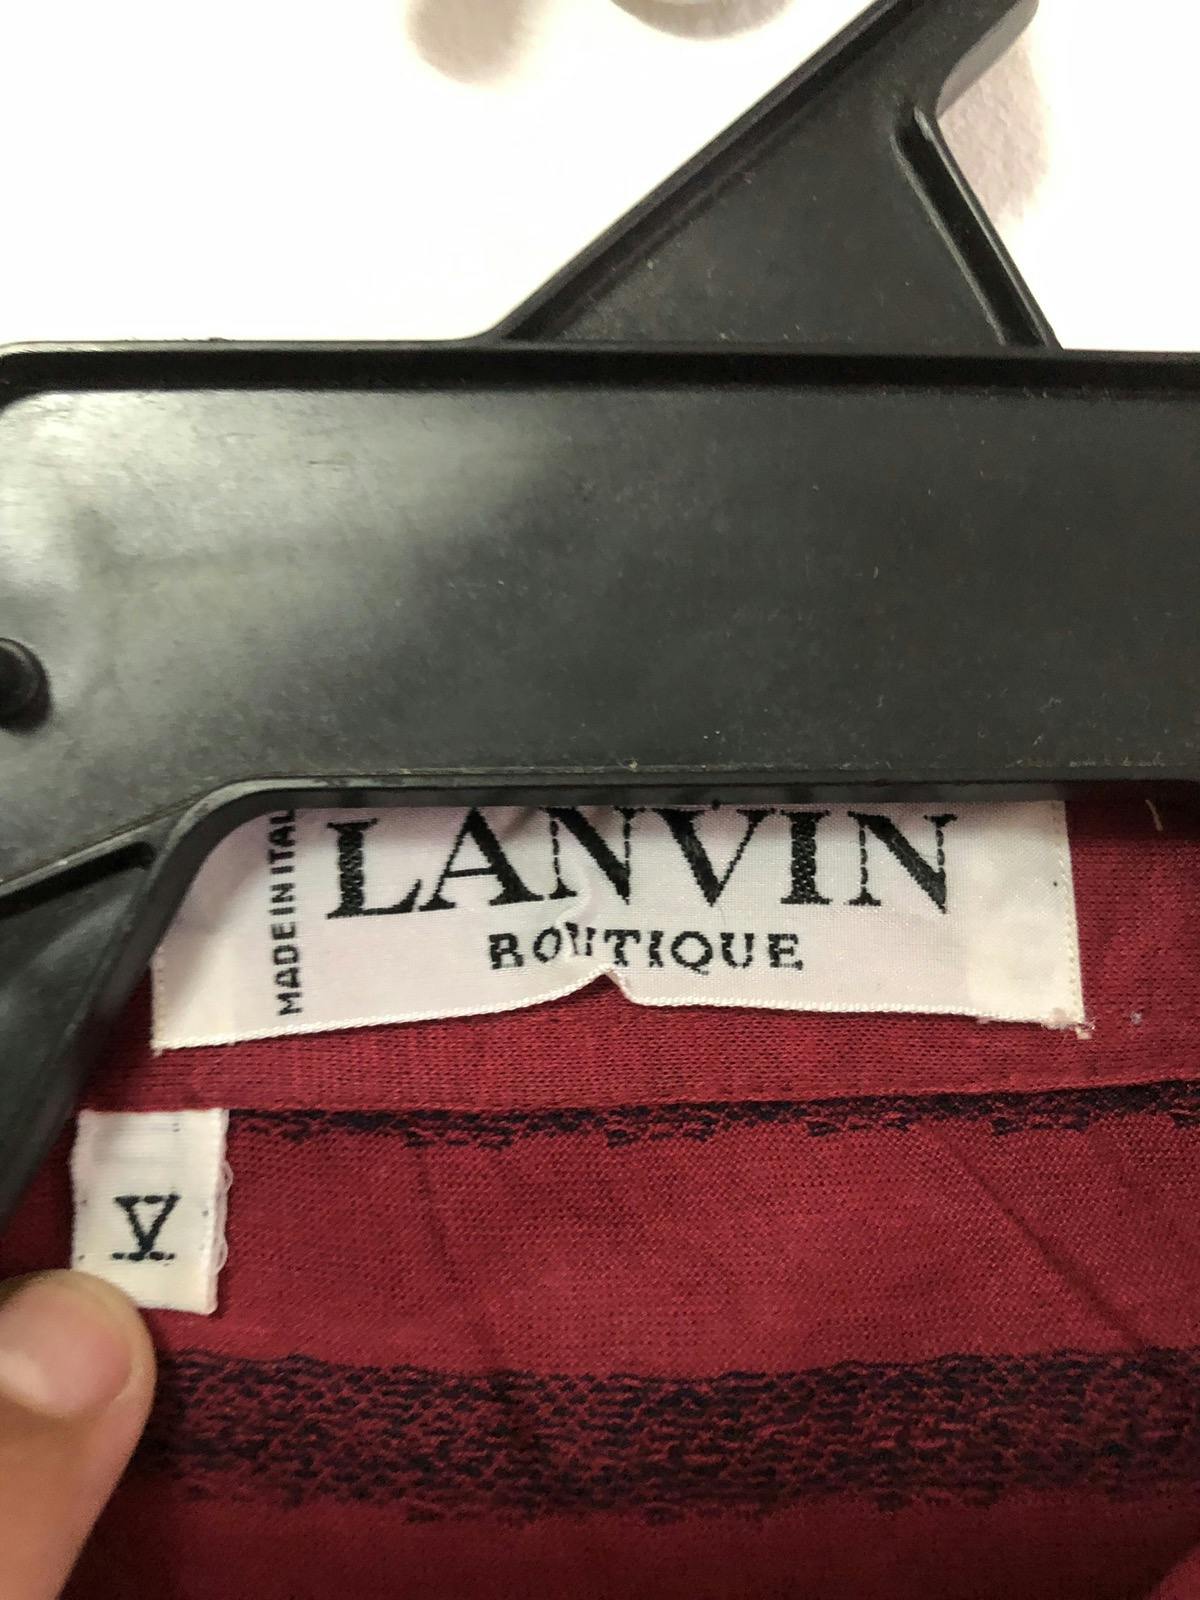 LANVIN Boutique Polo Shirt - 2